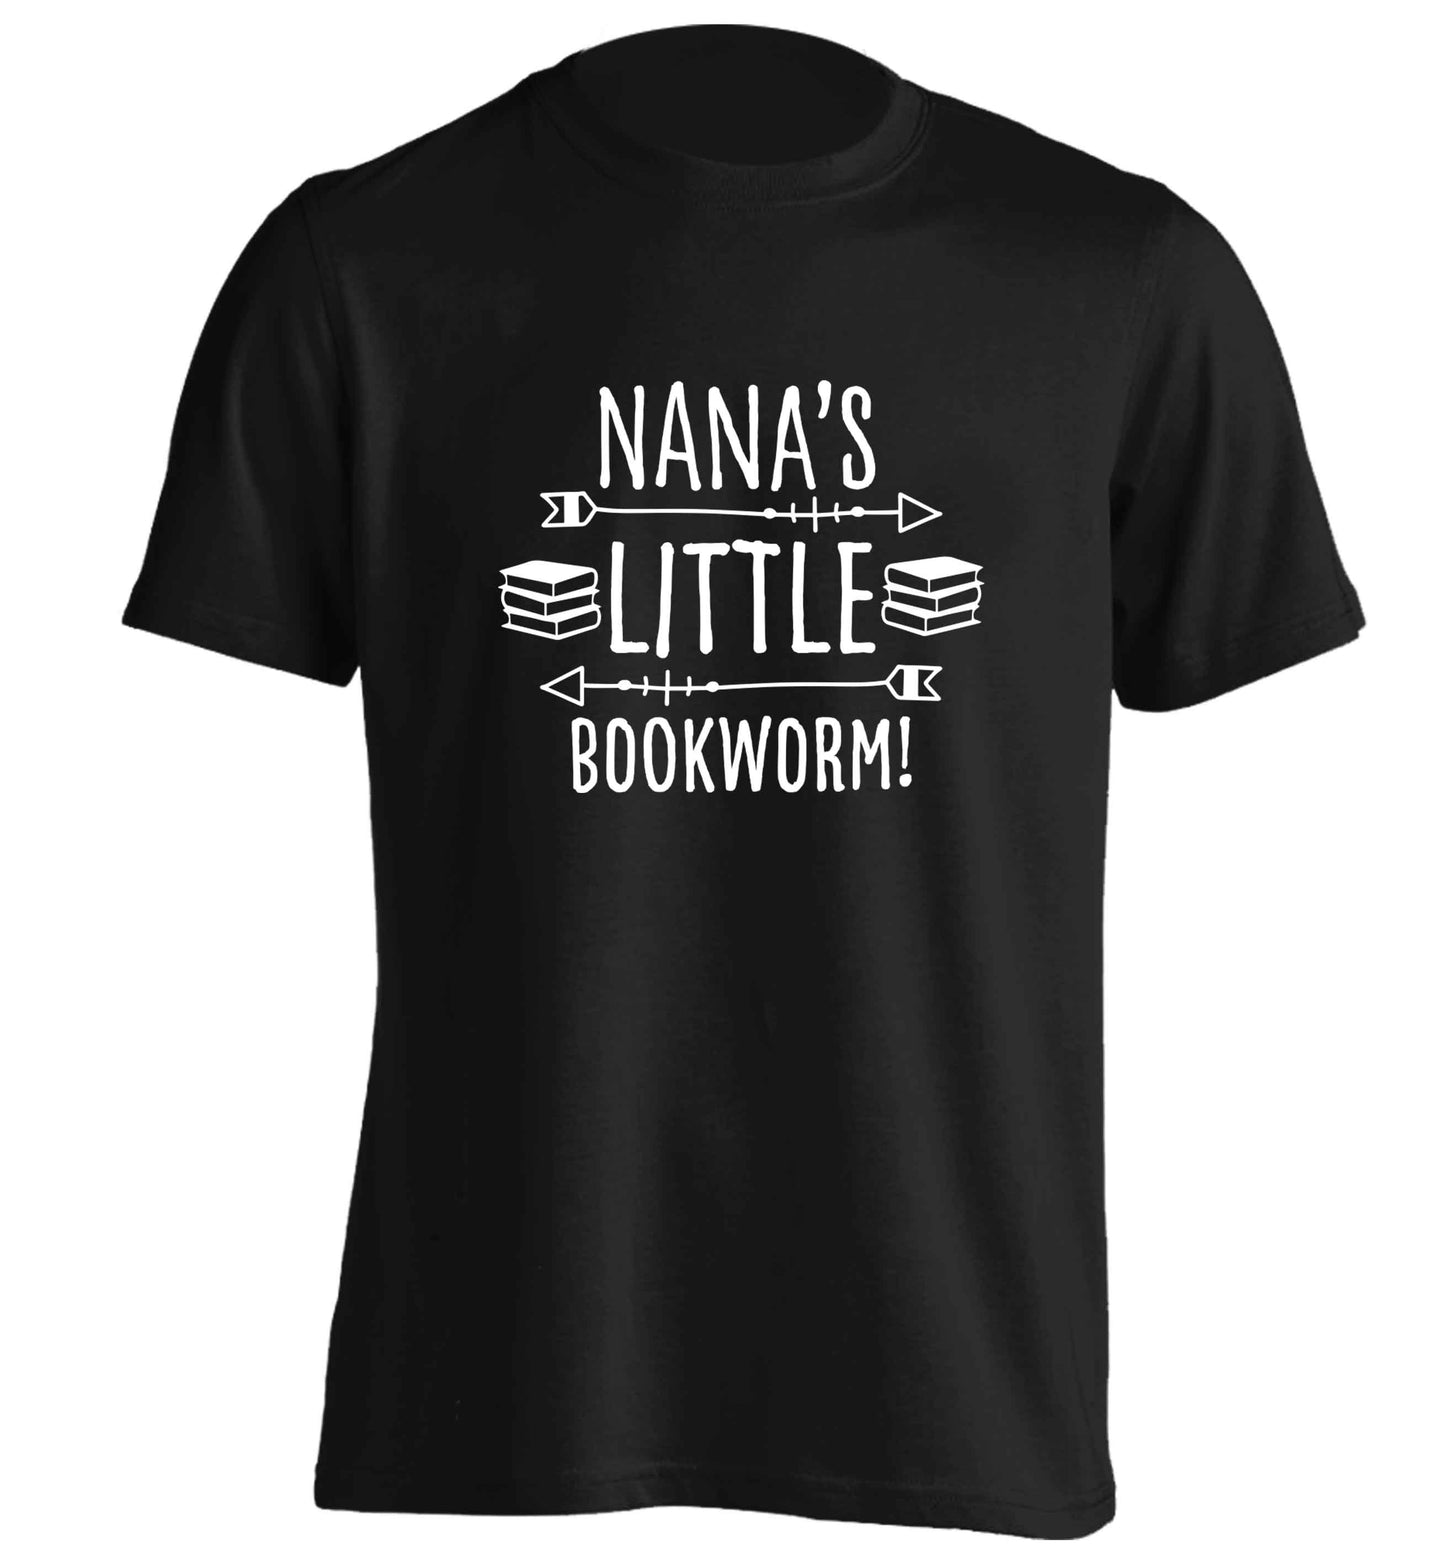 Nana's little bookworm adults unisex black Tshirt 2XL